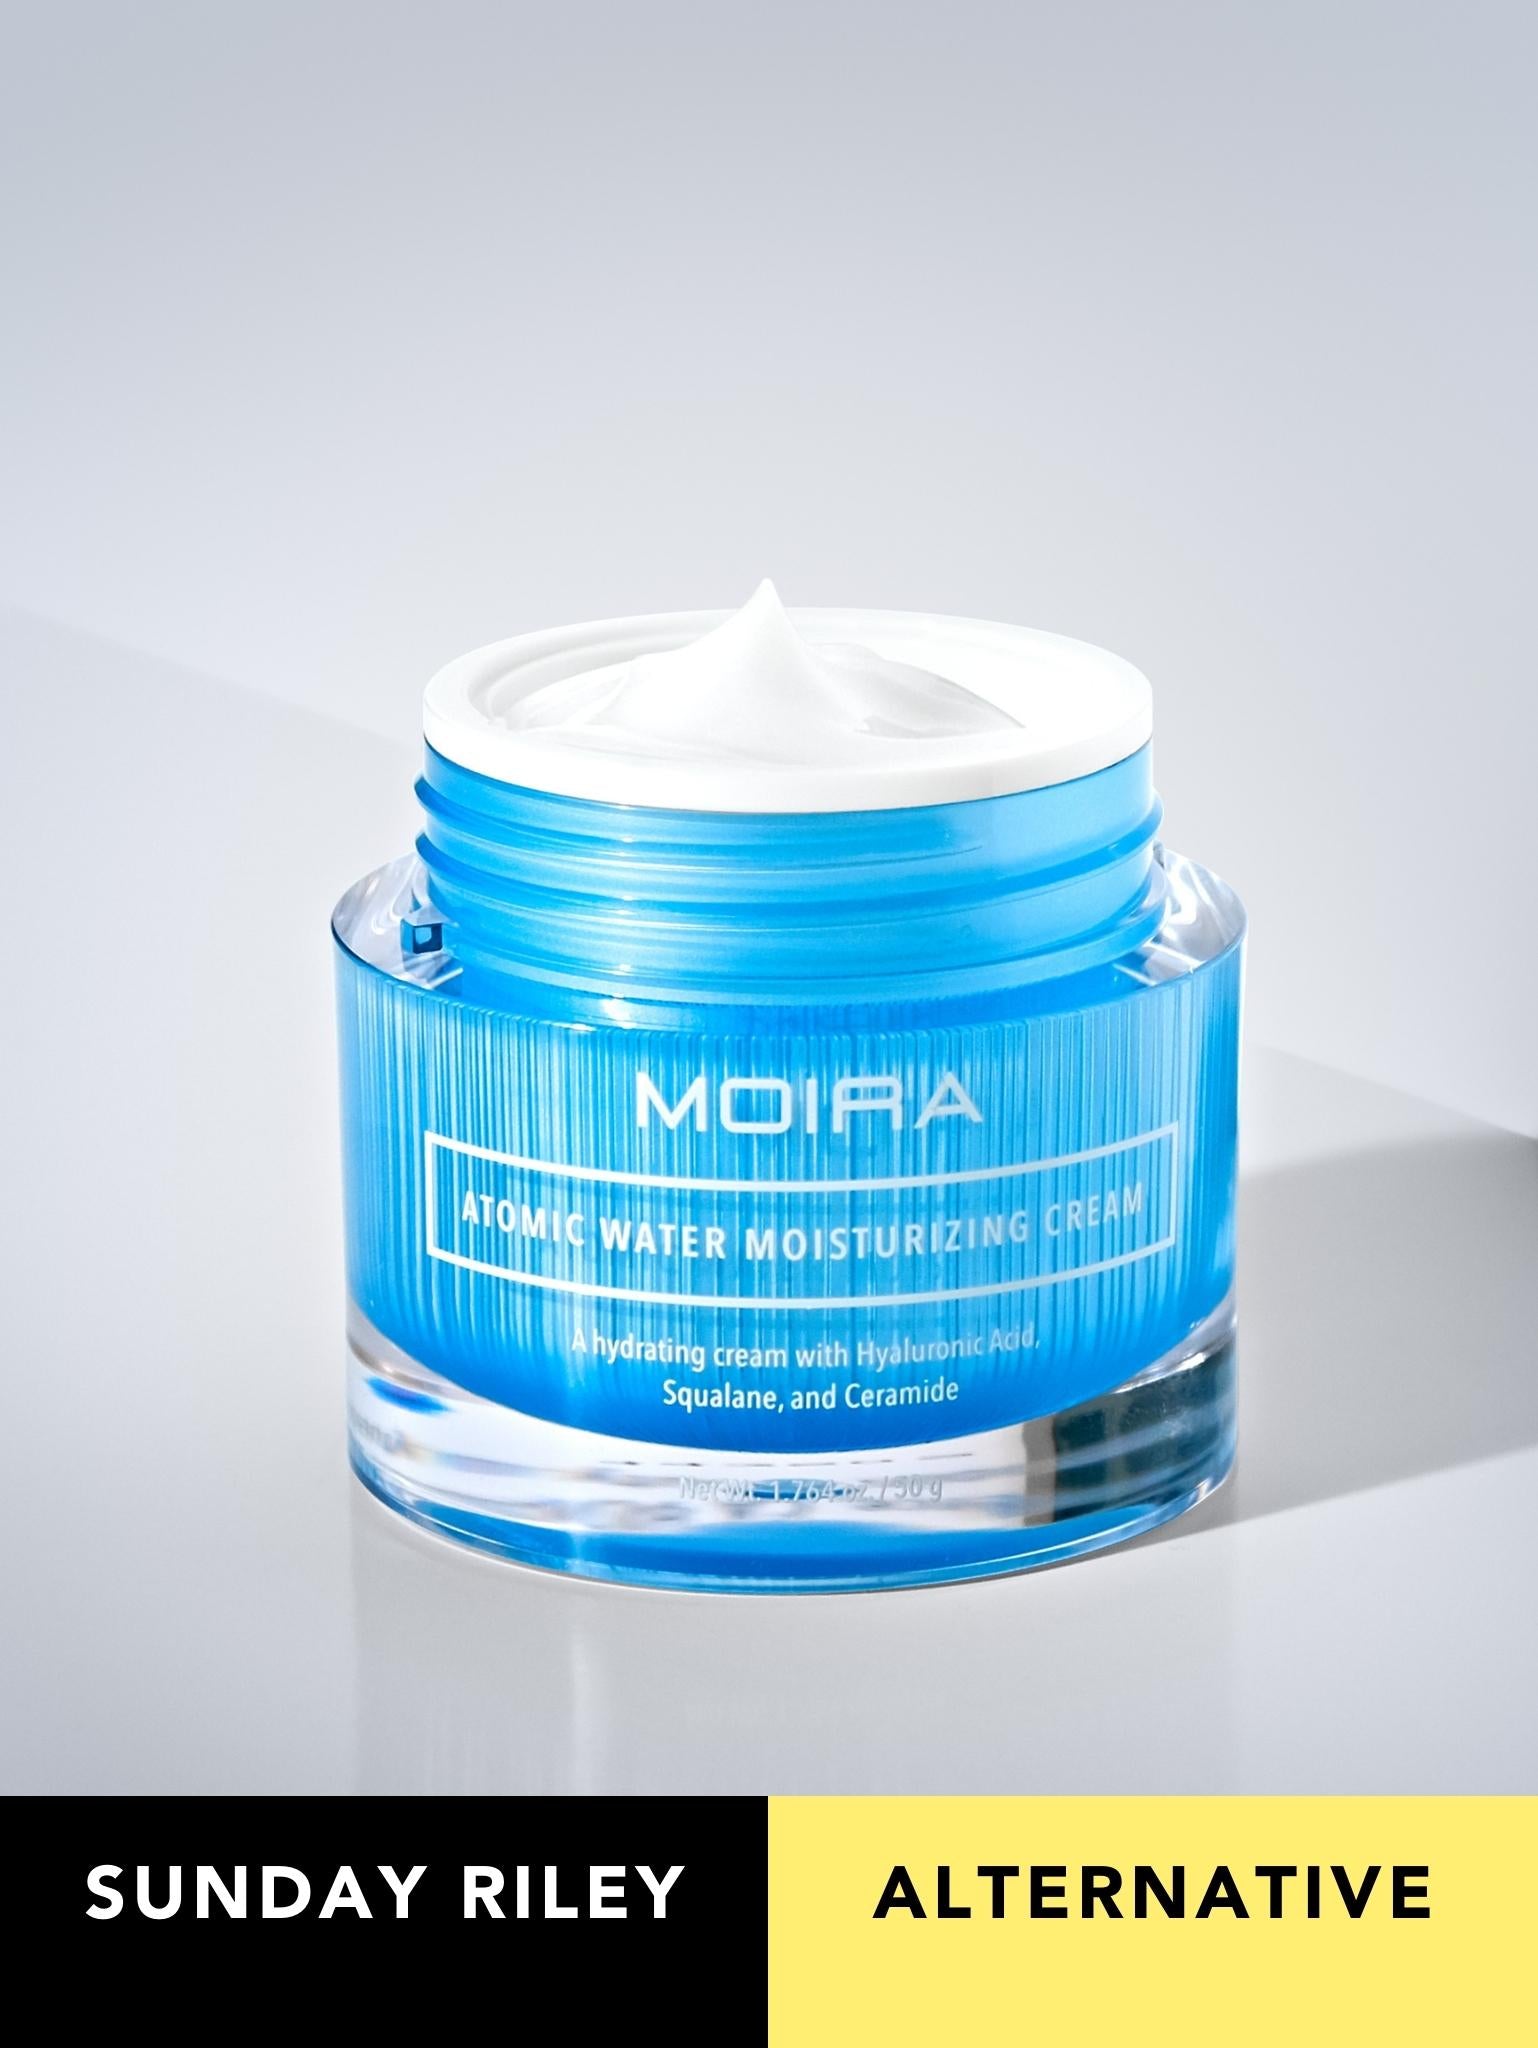 Moira Atomic Water Moisturising Cream